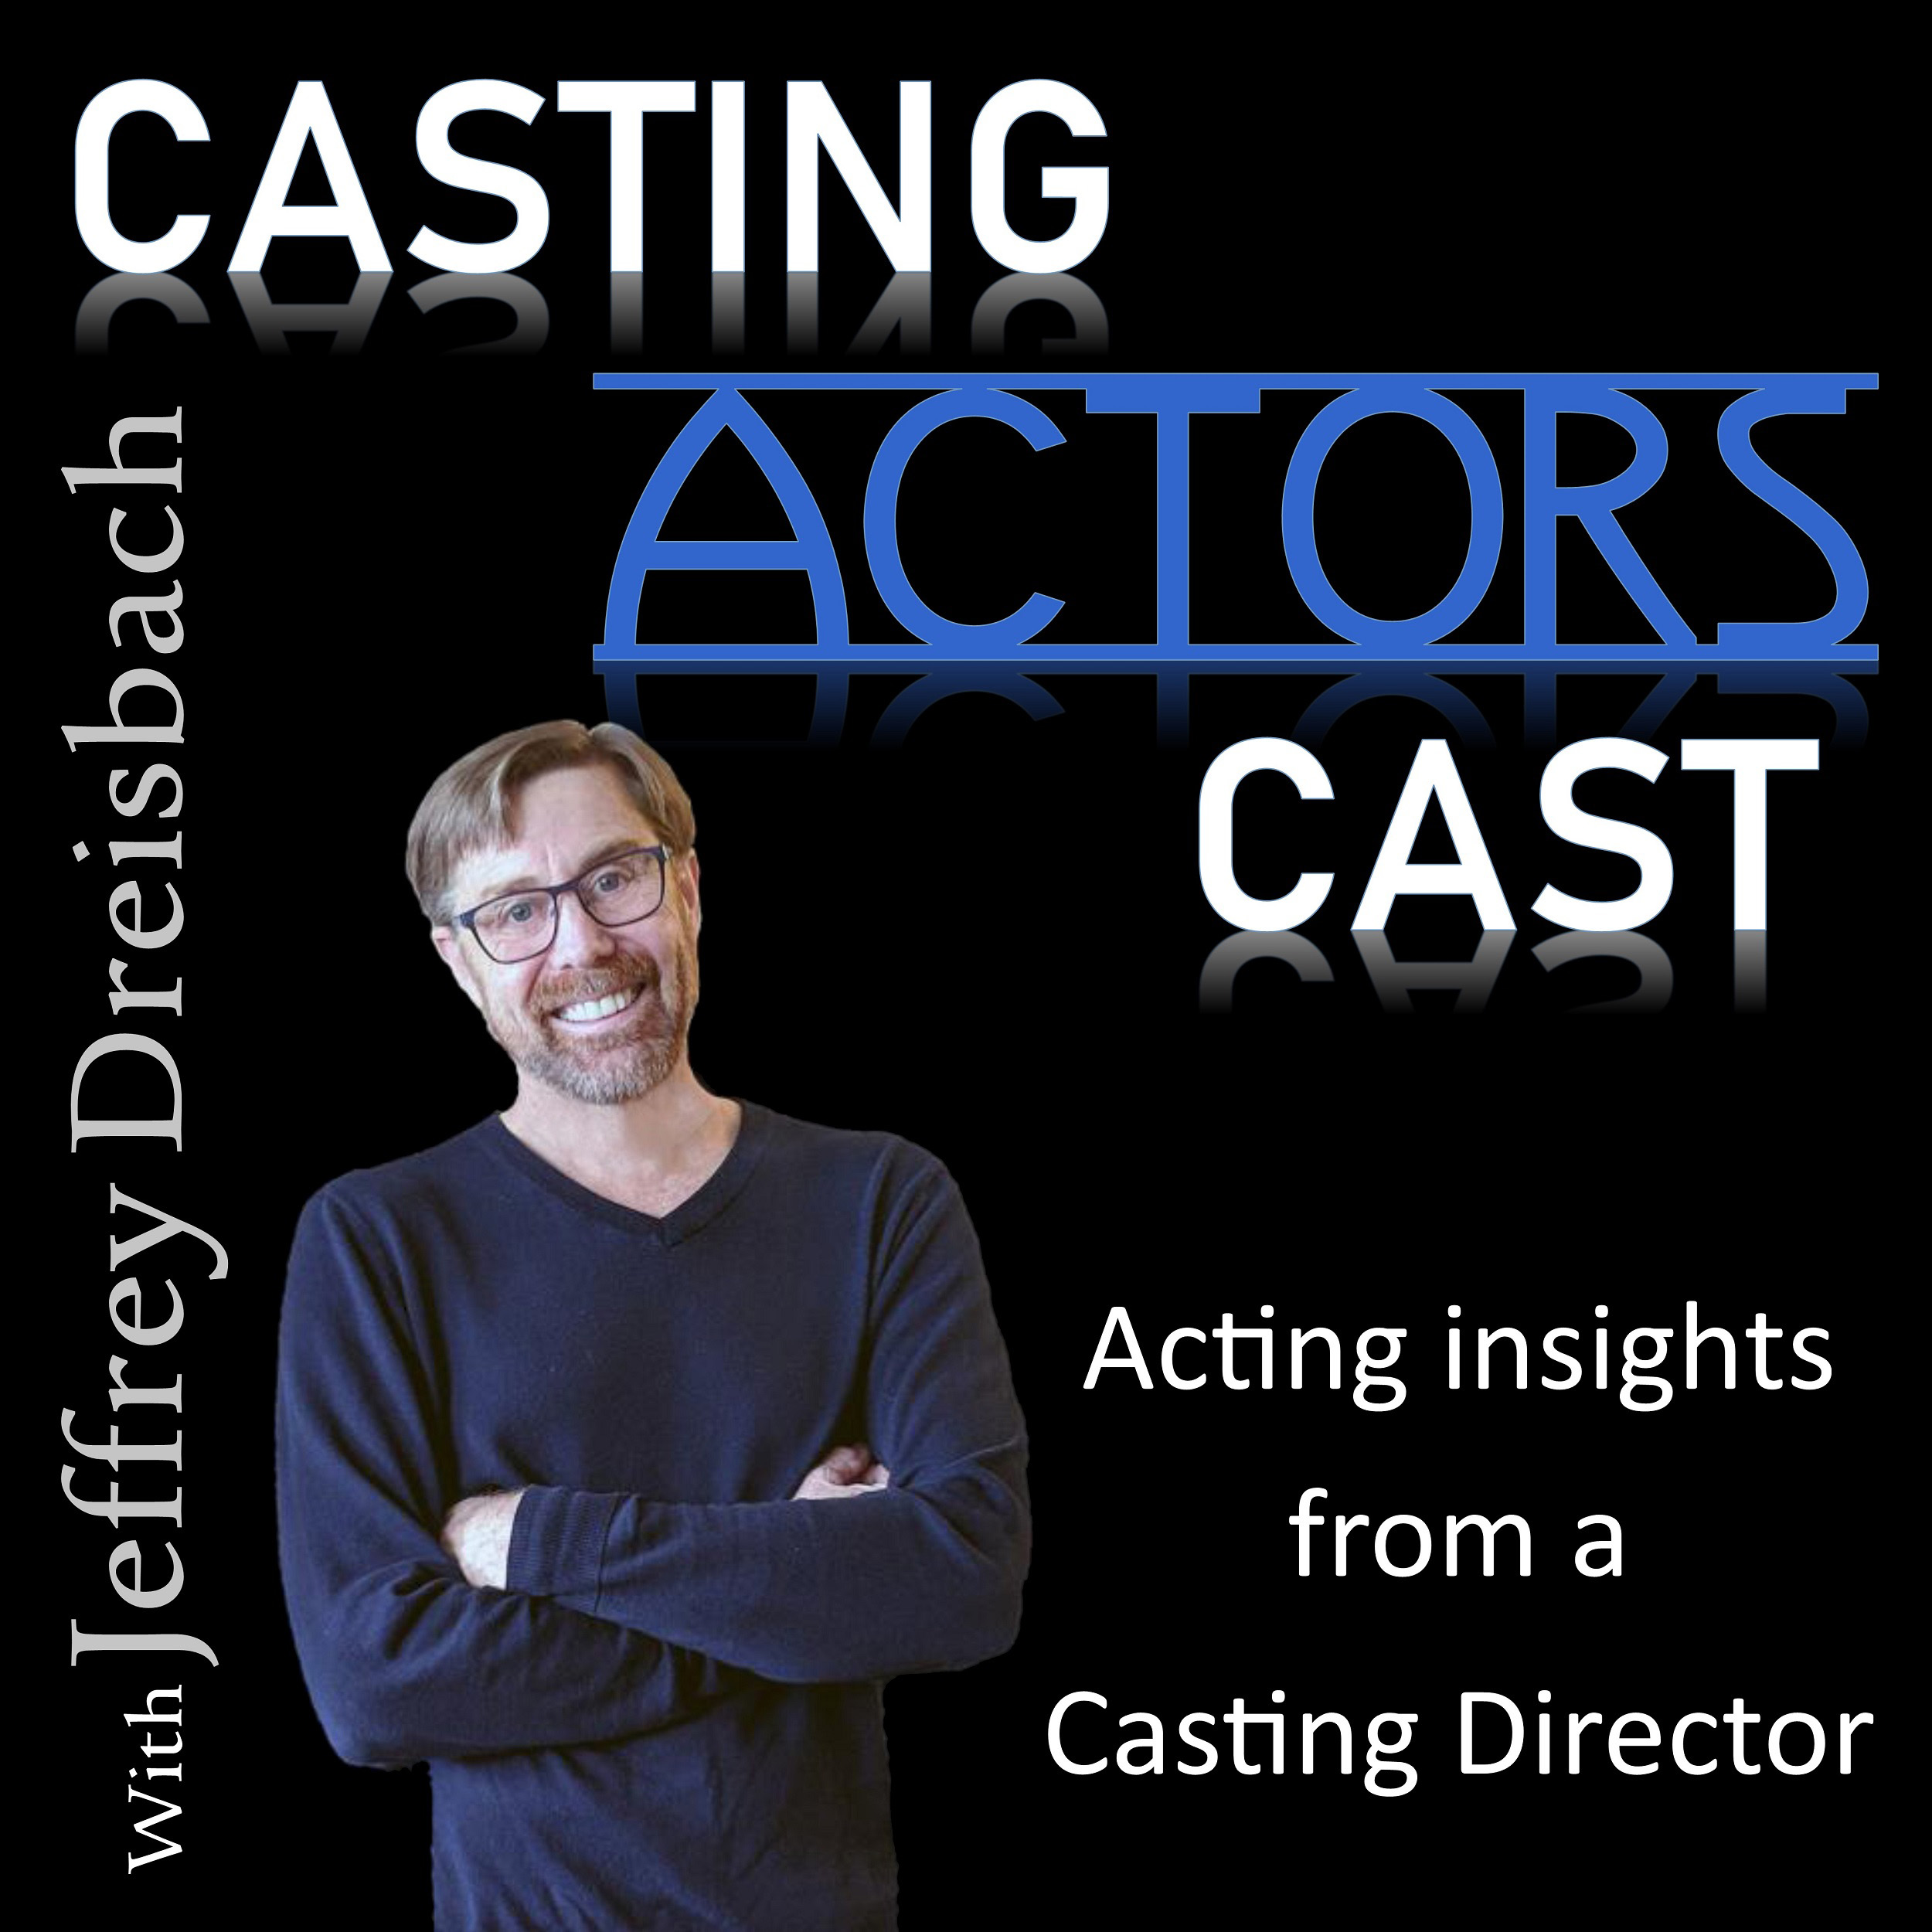 The actor’s marketing checklist